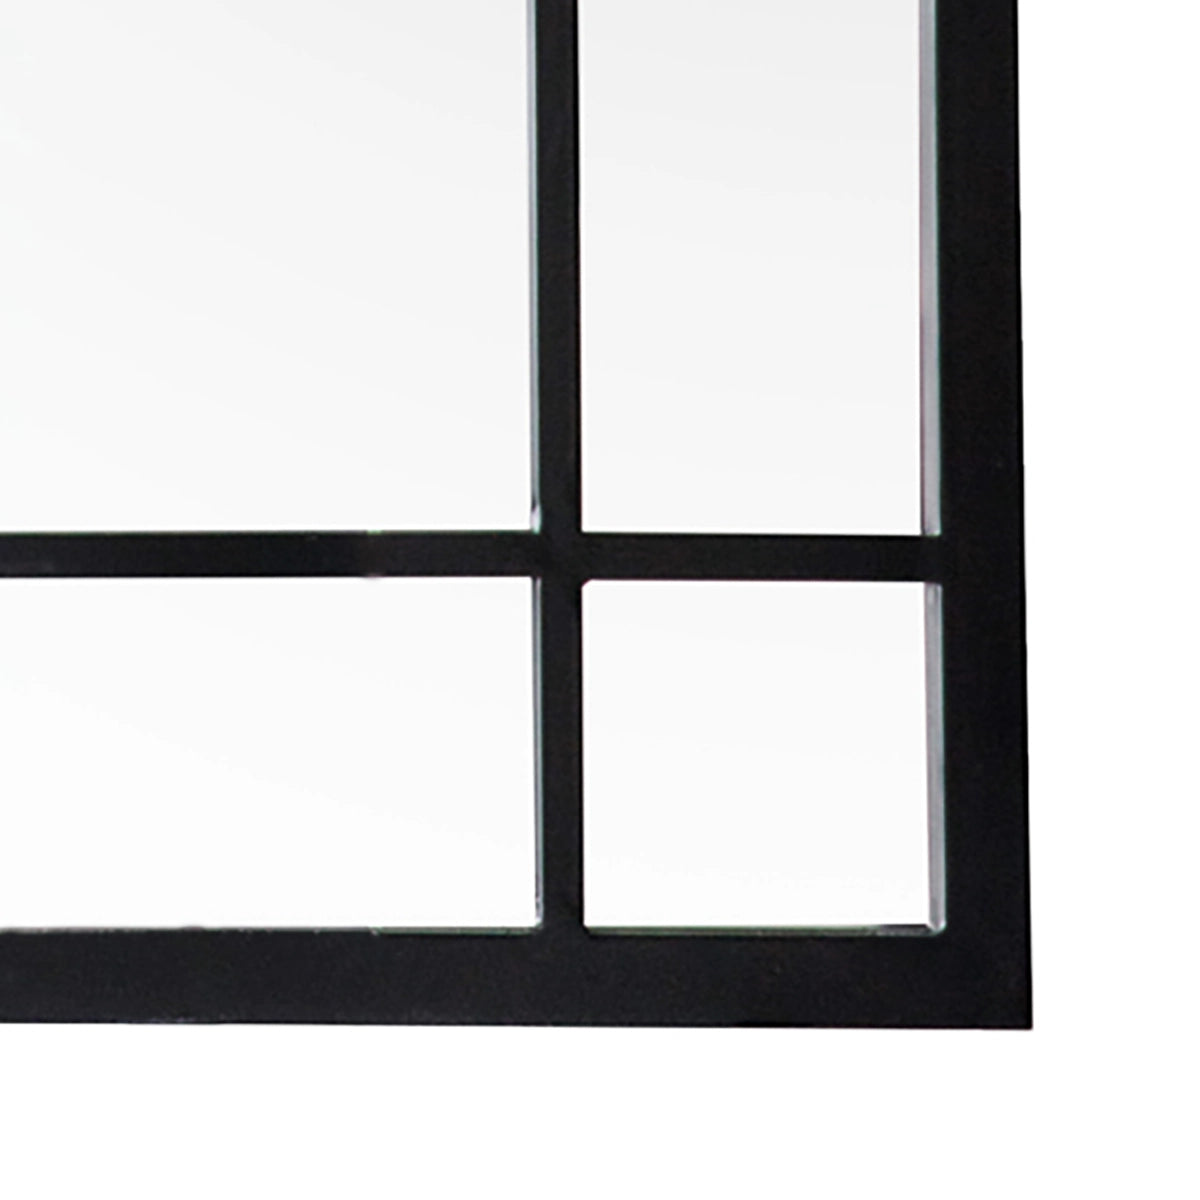 Bath Large Black Metal Framed Arch Garden Window Mirror 135x90x3cm– Click Style